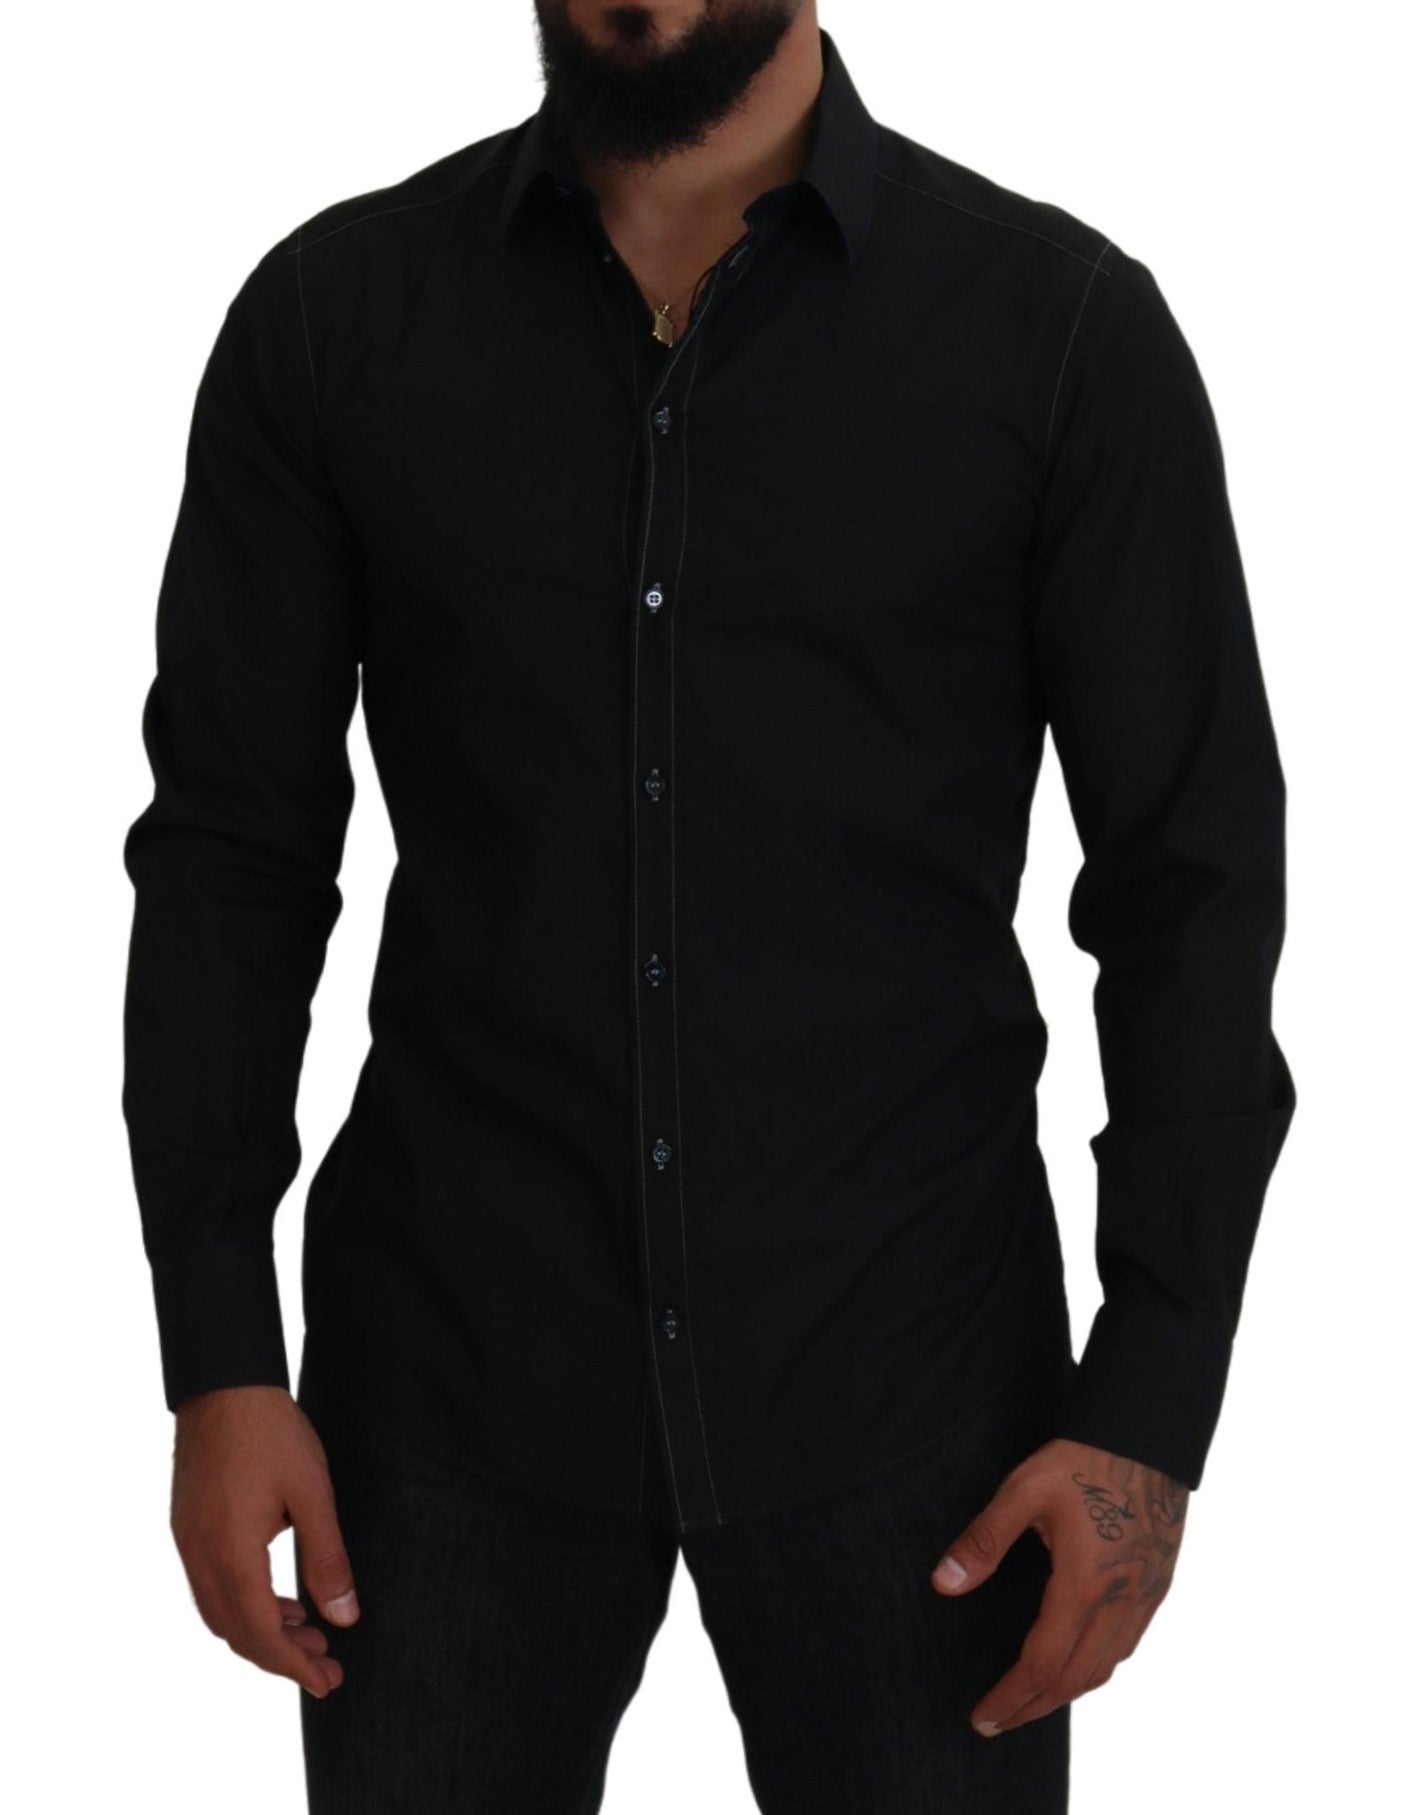 Dolce & Gabbana Elegant Black Formal Cotton Shirt